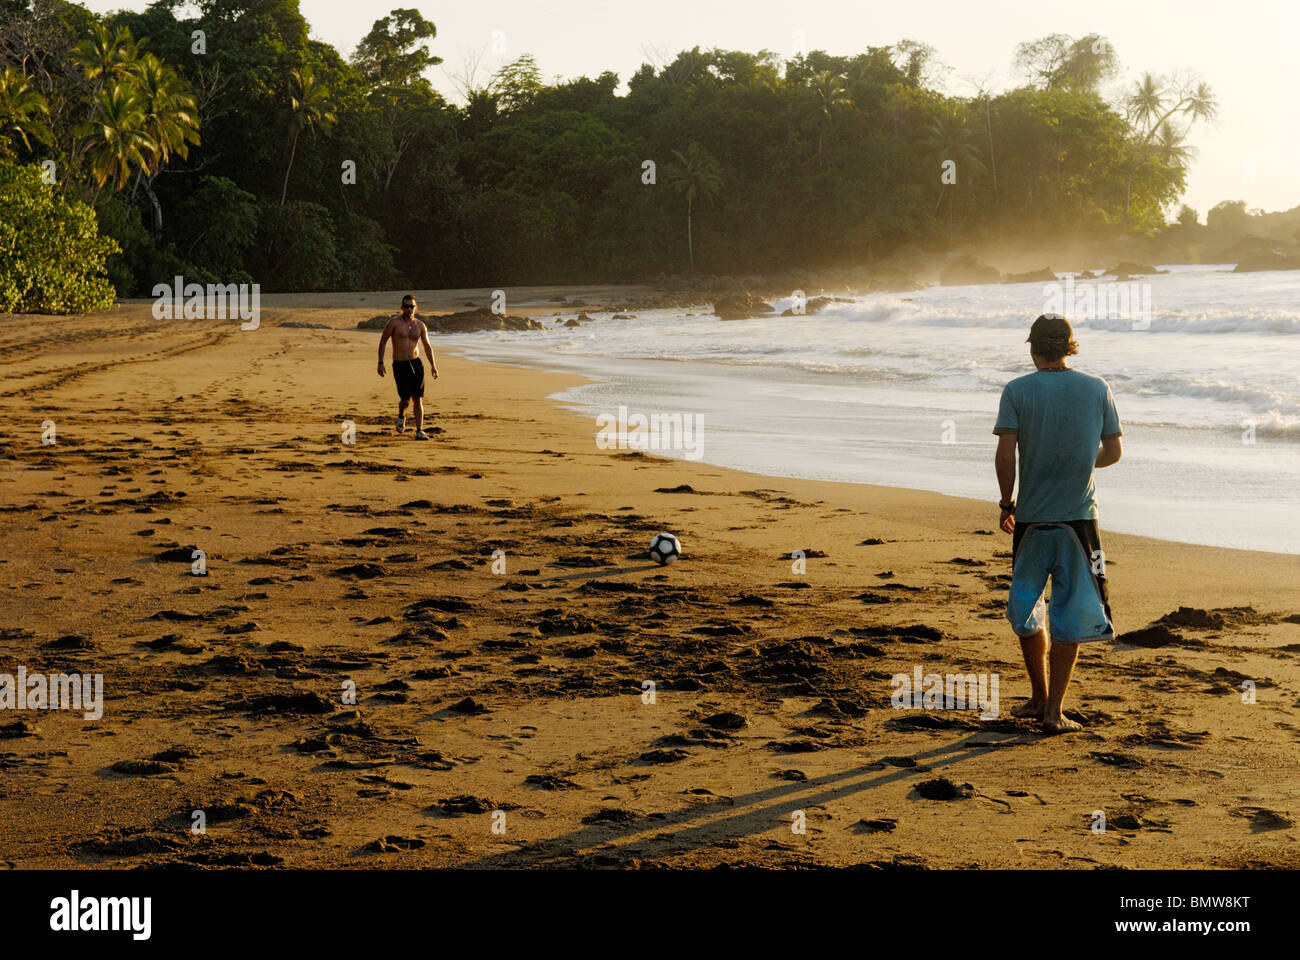 Soccer on the beach, Osa Peninsula, Costa Rica Stock Photo